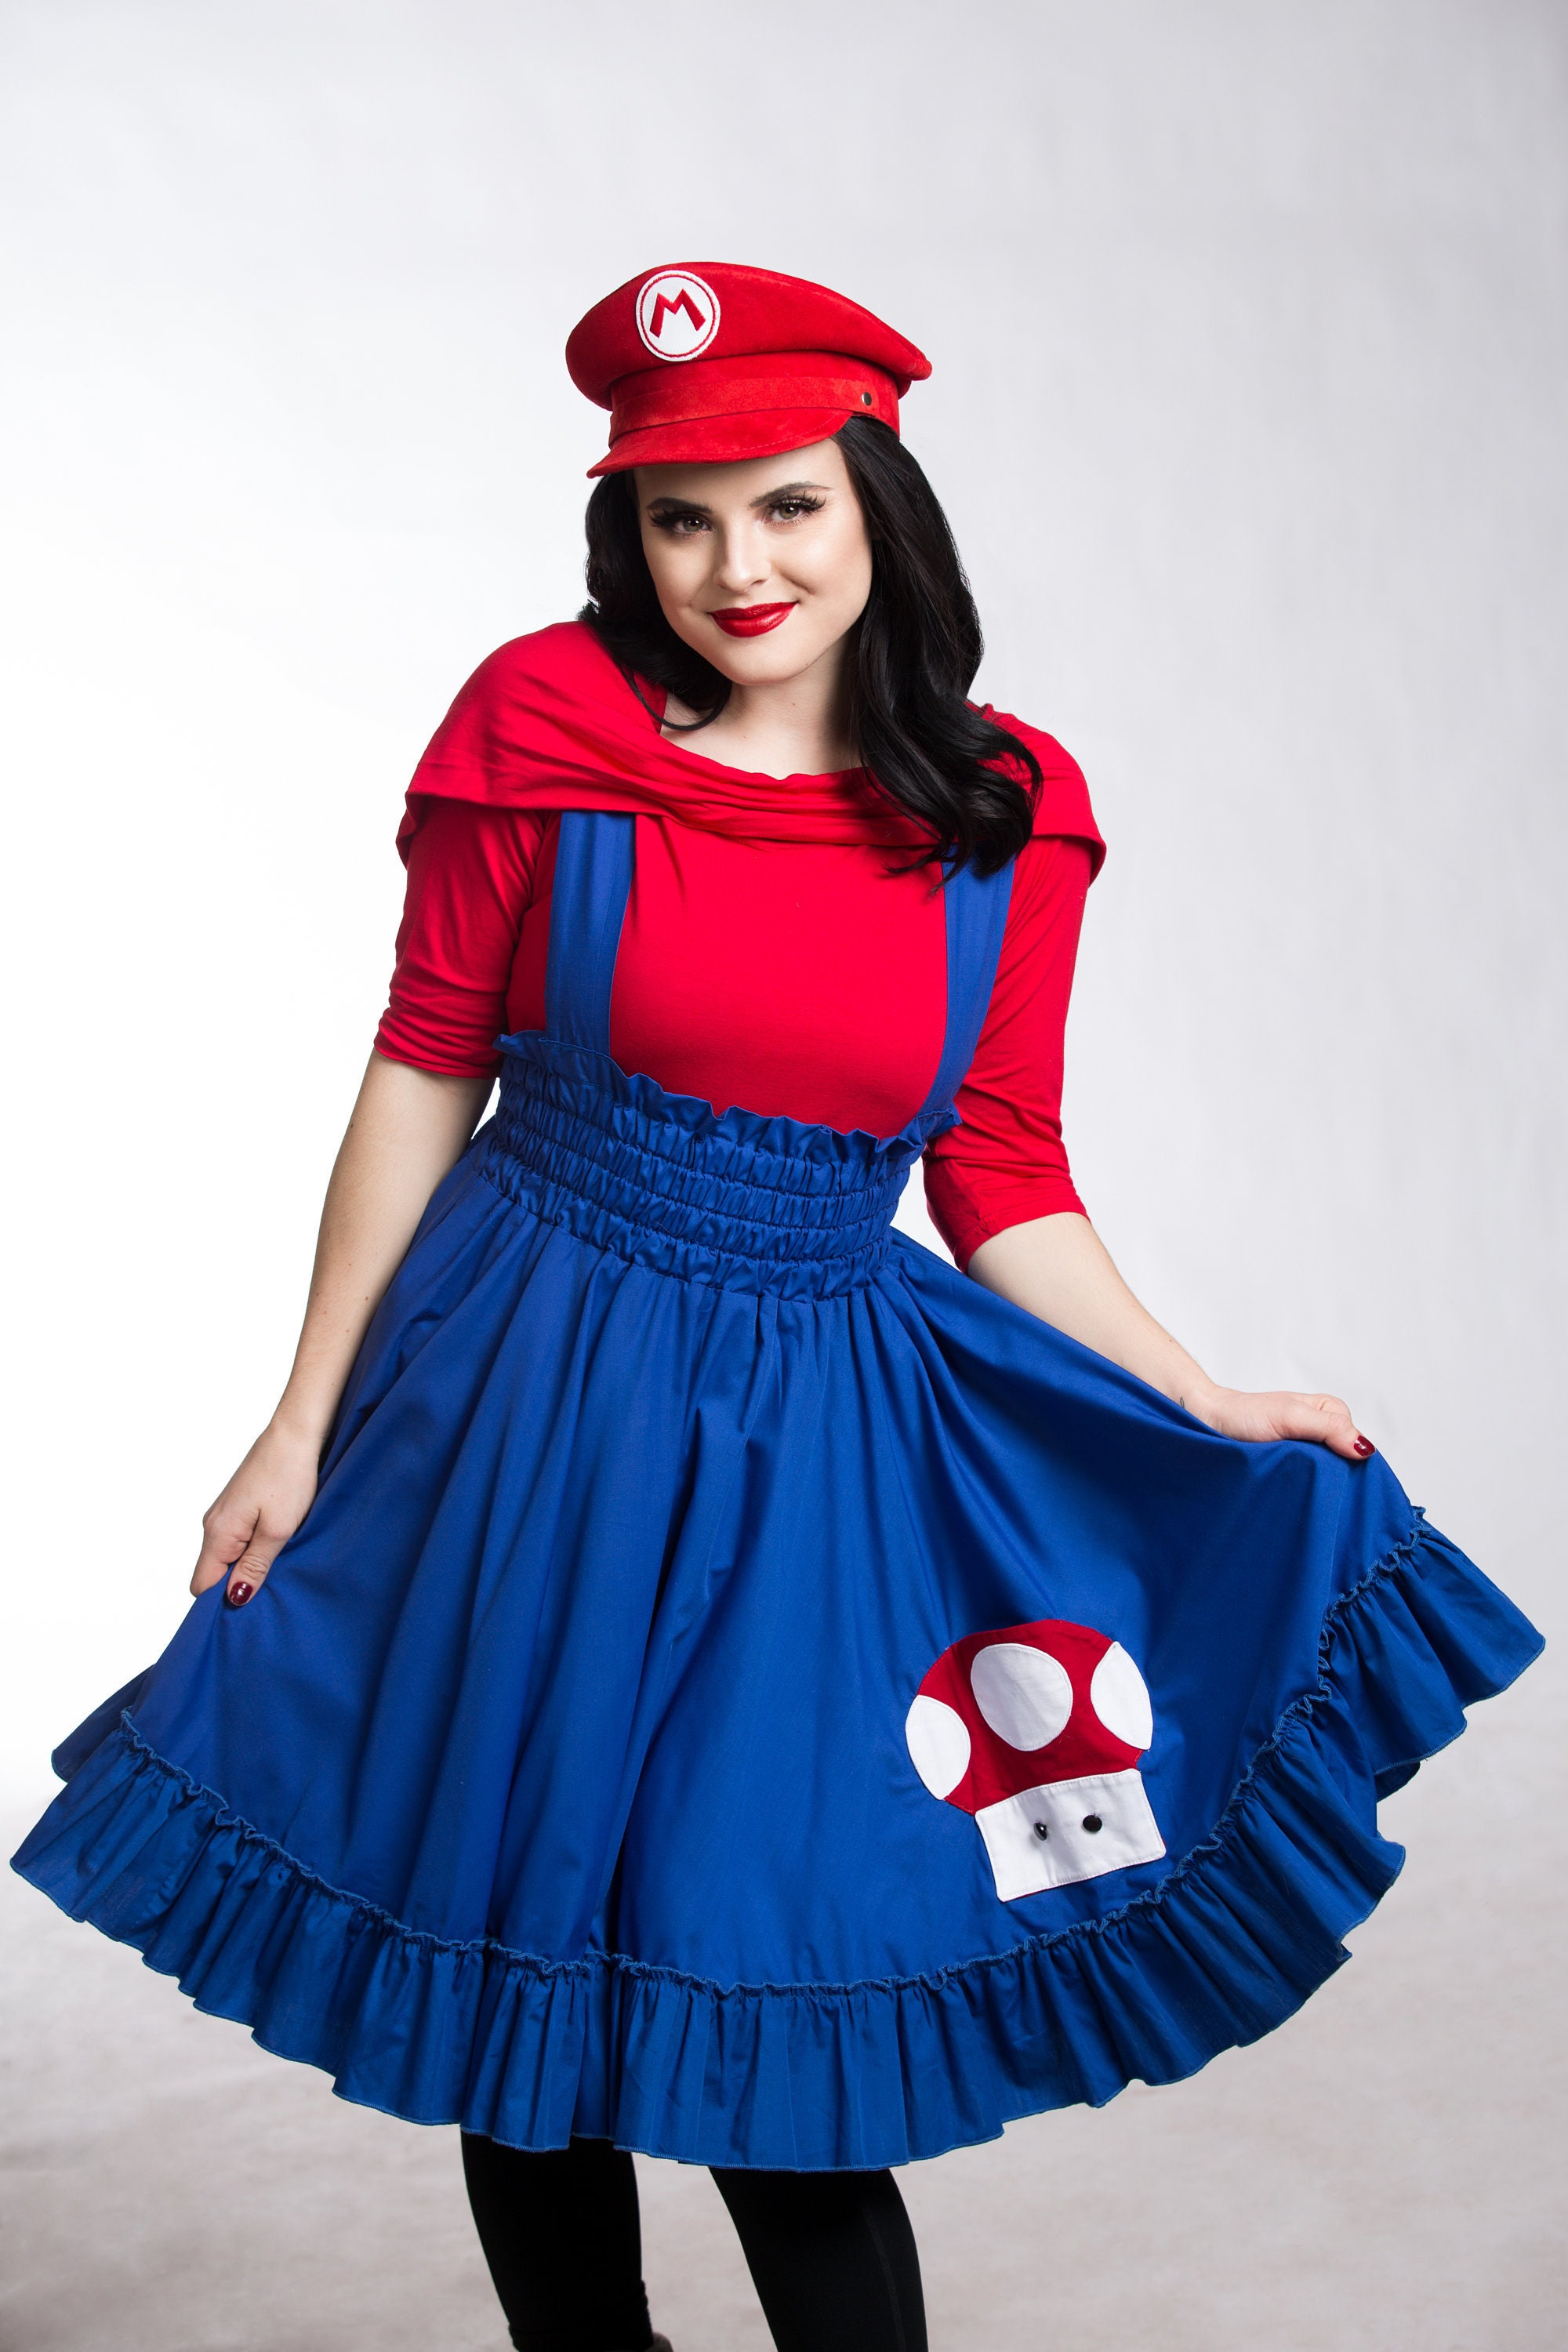 Mario Cosplay Dress Woman's Costume Geek Super Mario - Etsy